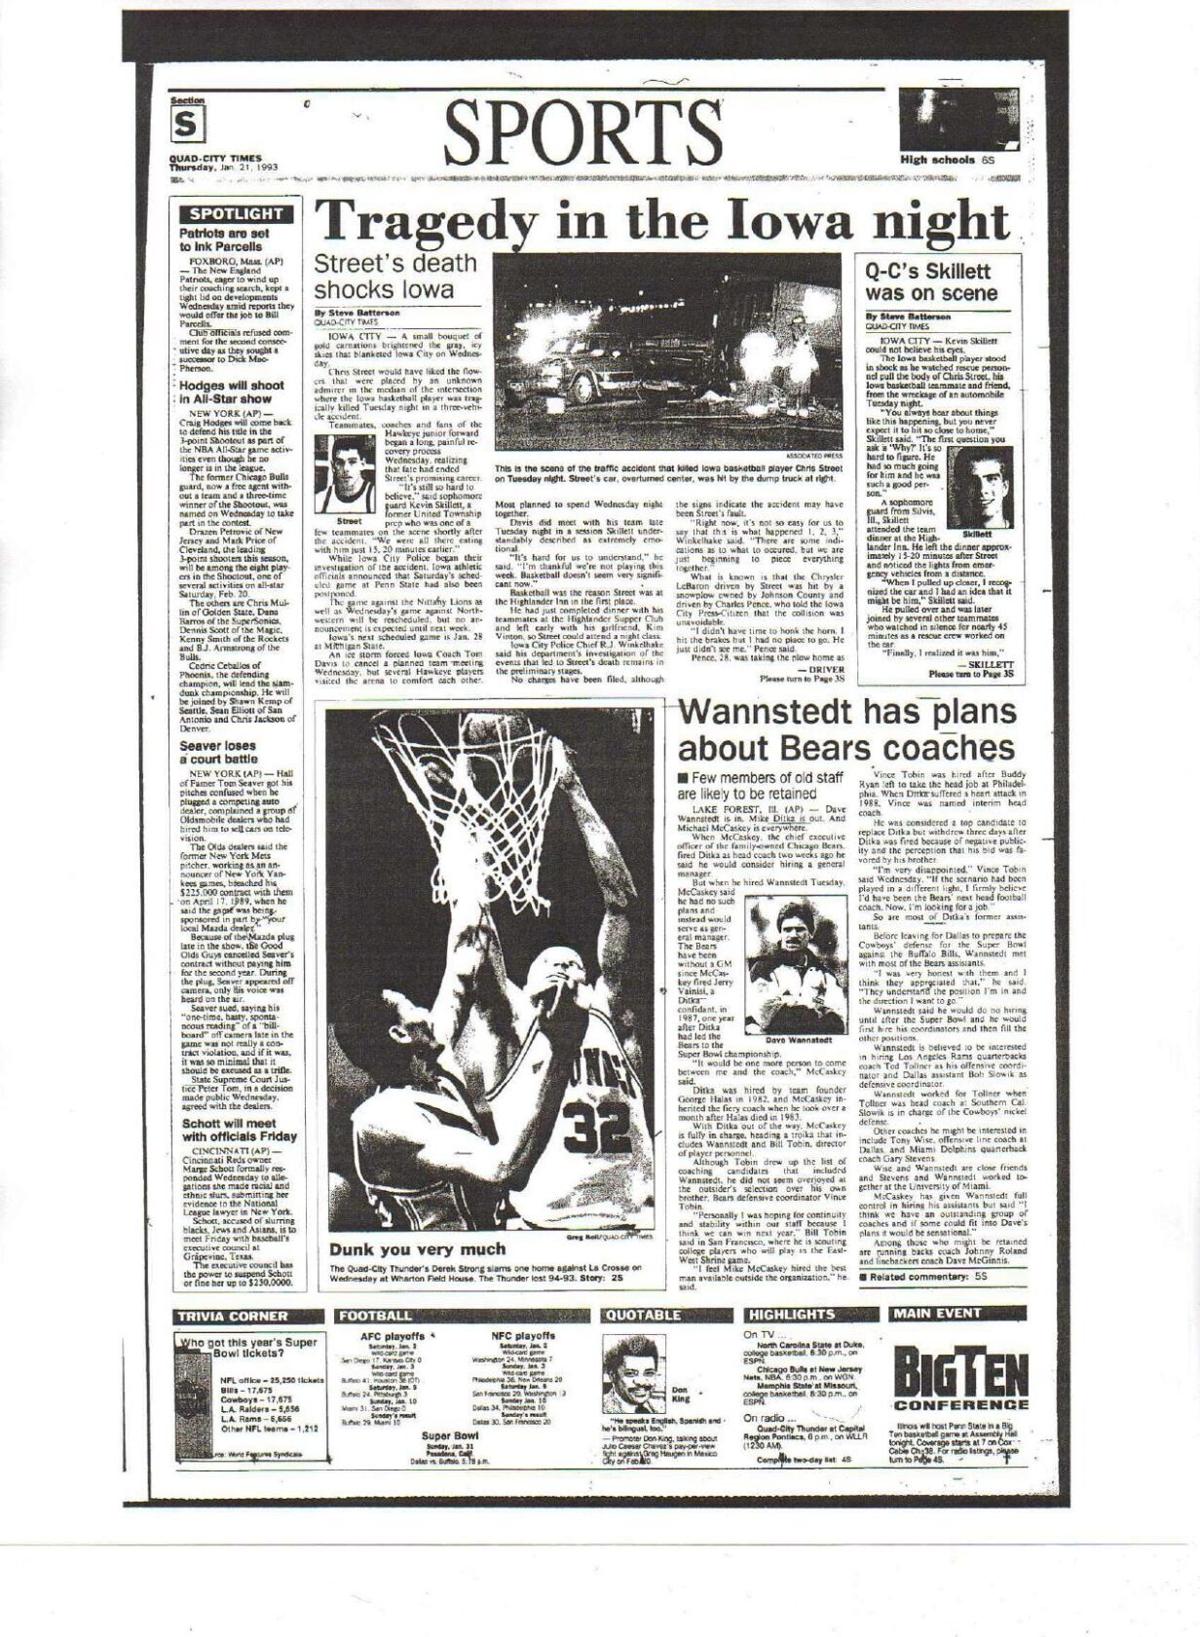 Jan. 21, 1993 Quad-City Times sports page